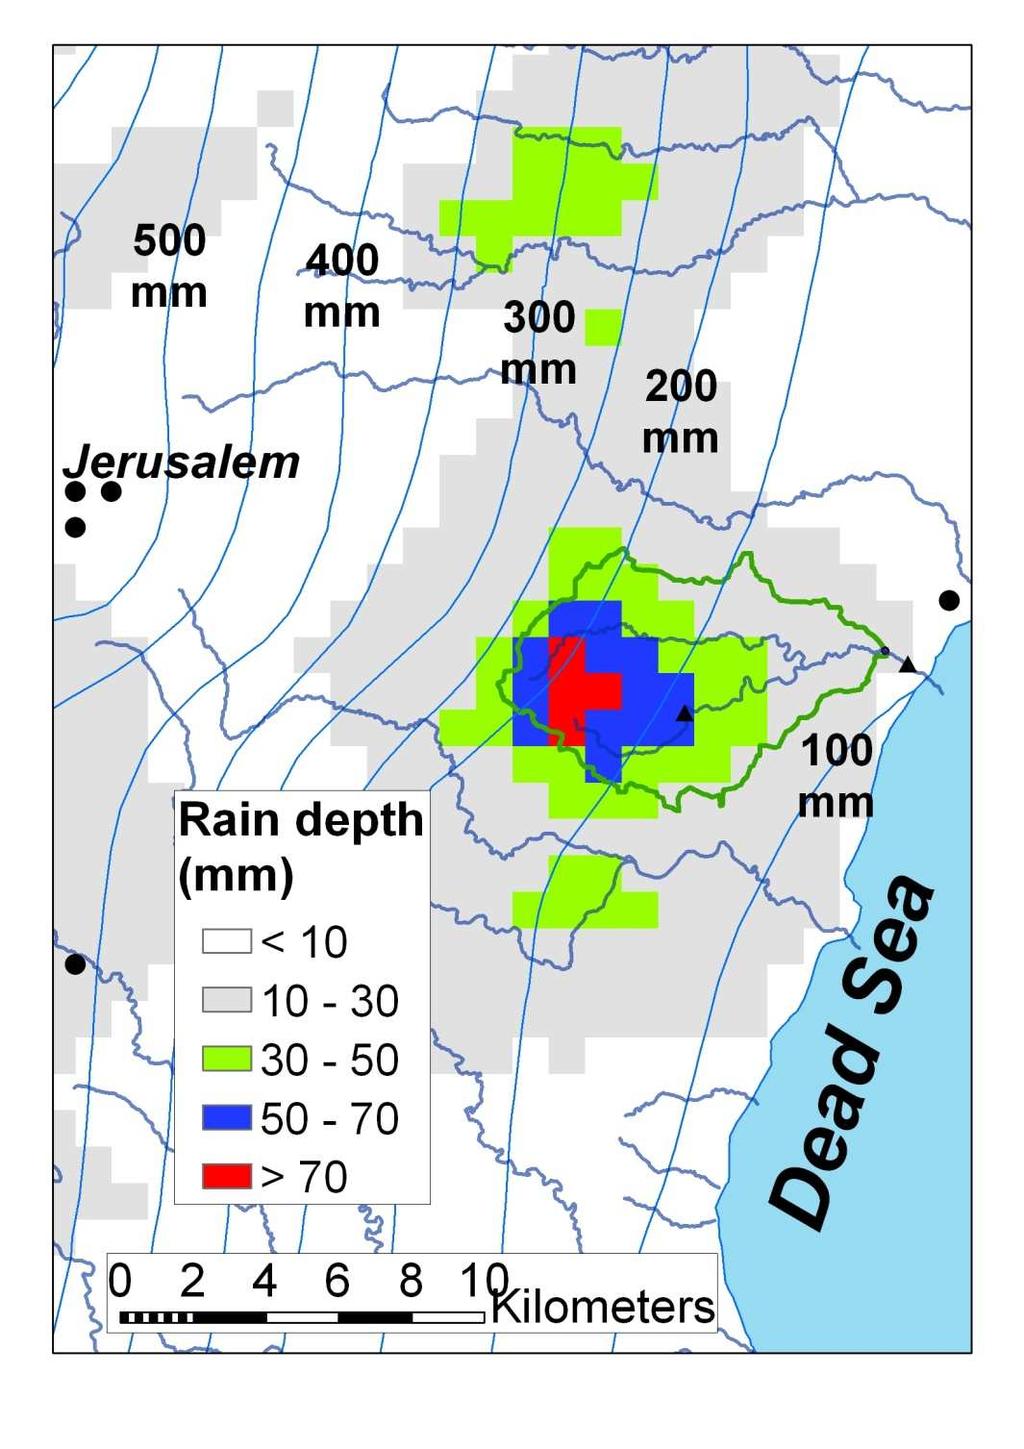 Flash flood analysis over the Dead Sea region using radar data Basin area: 2.